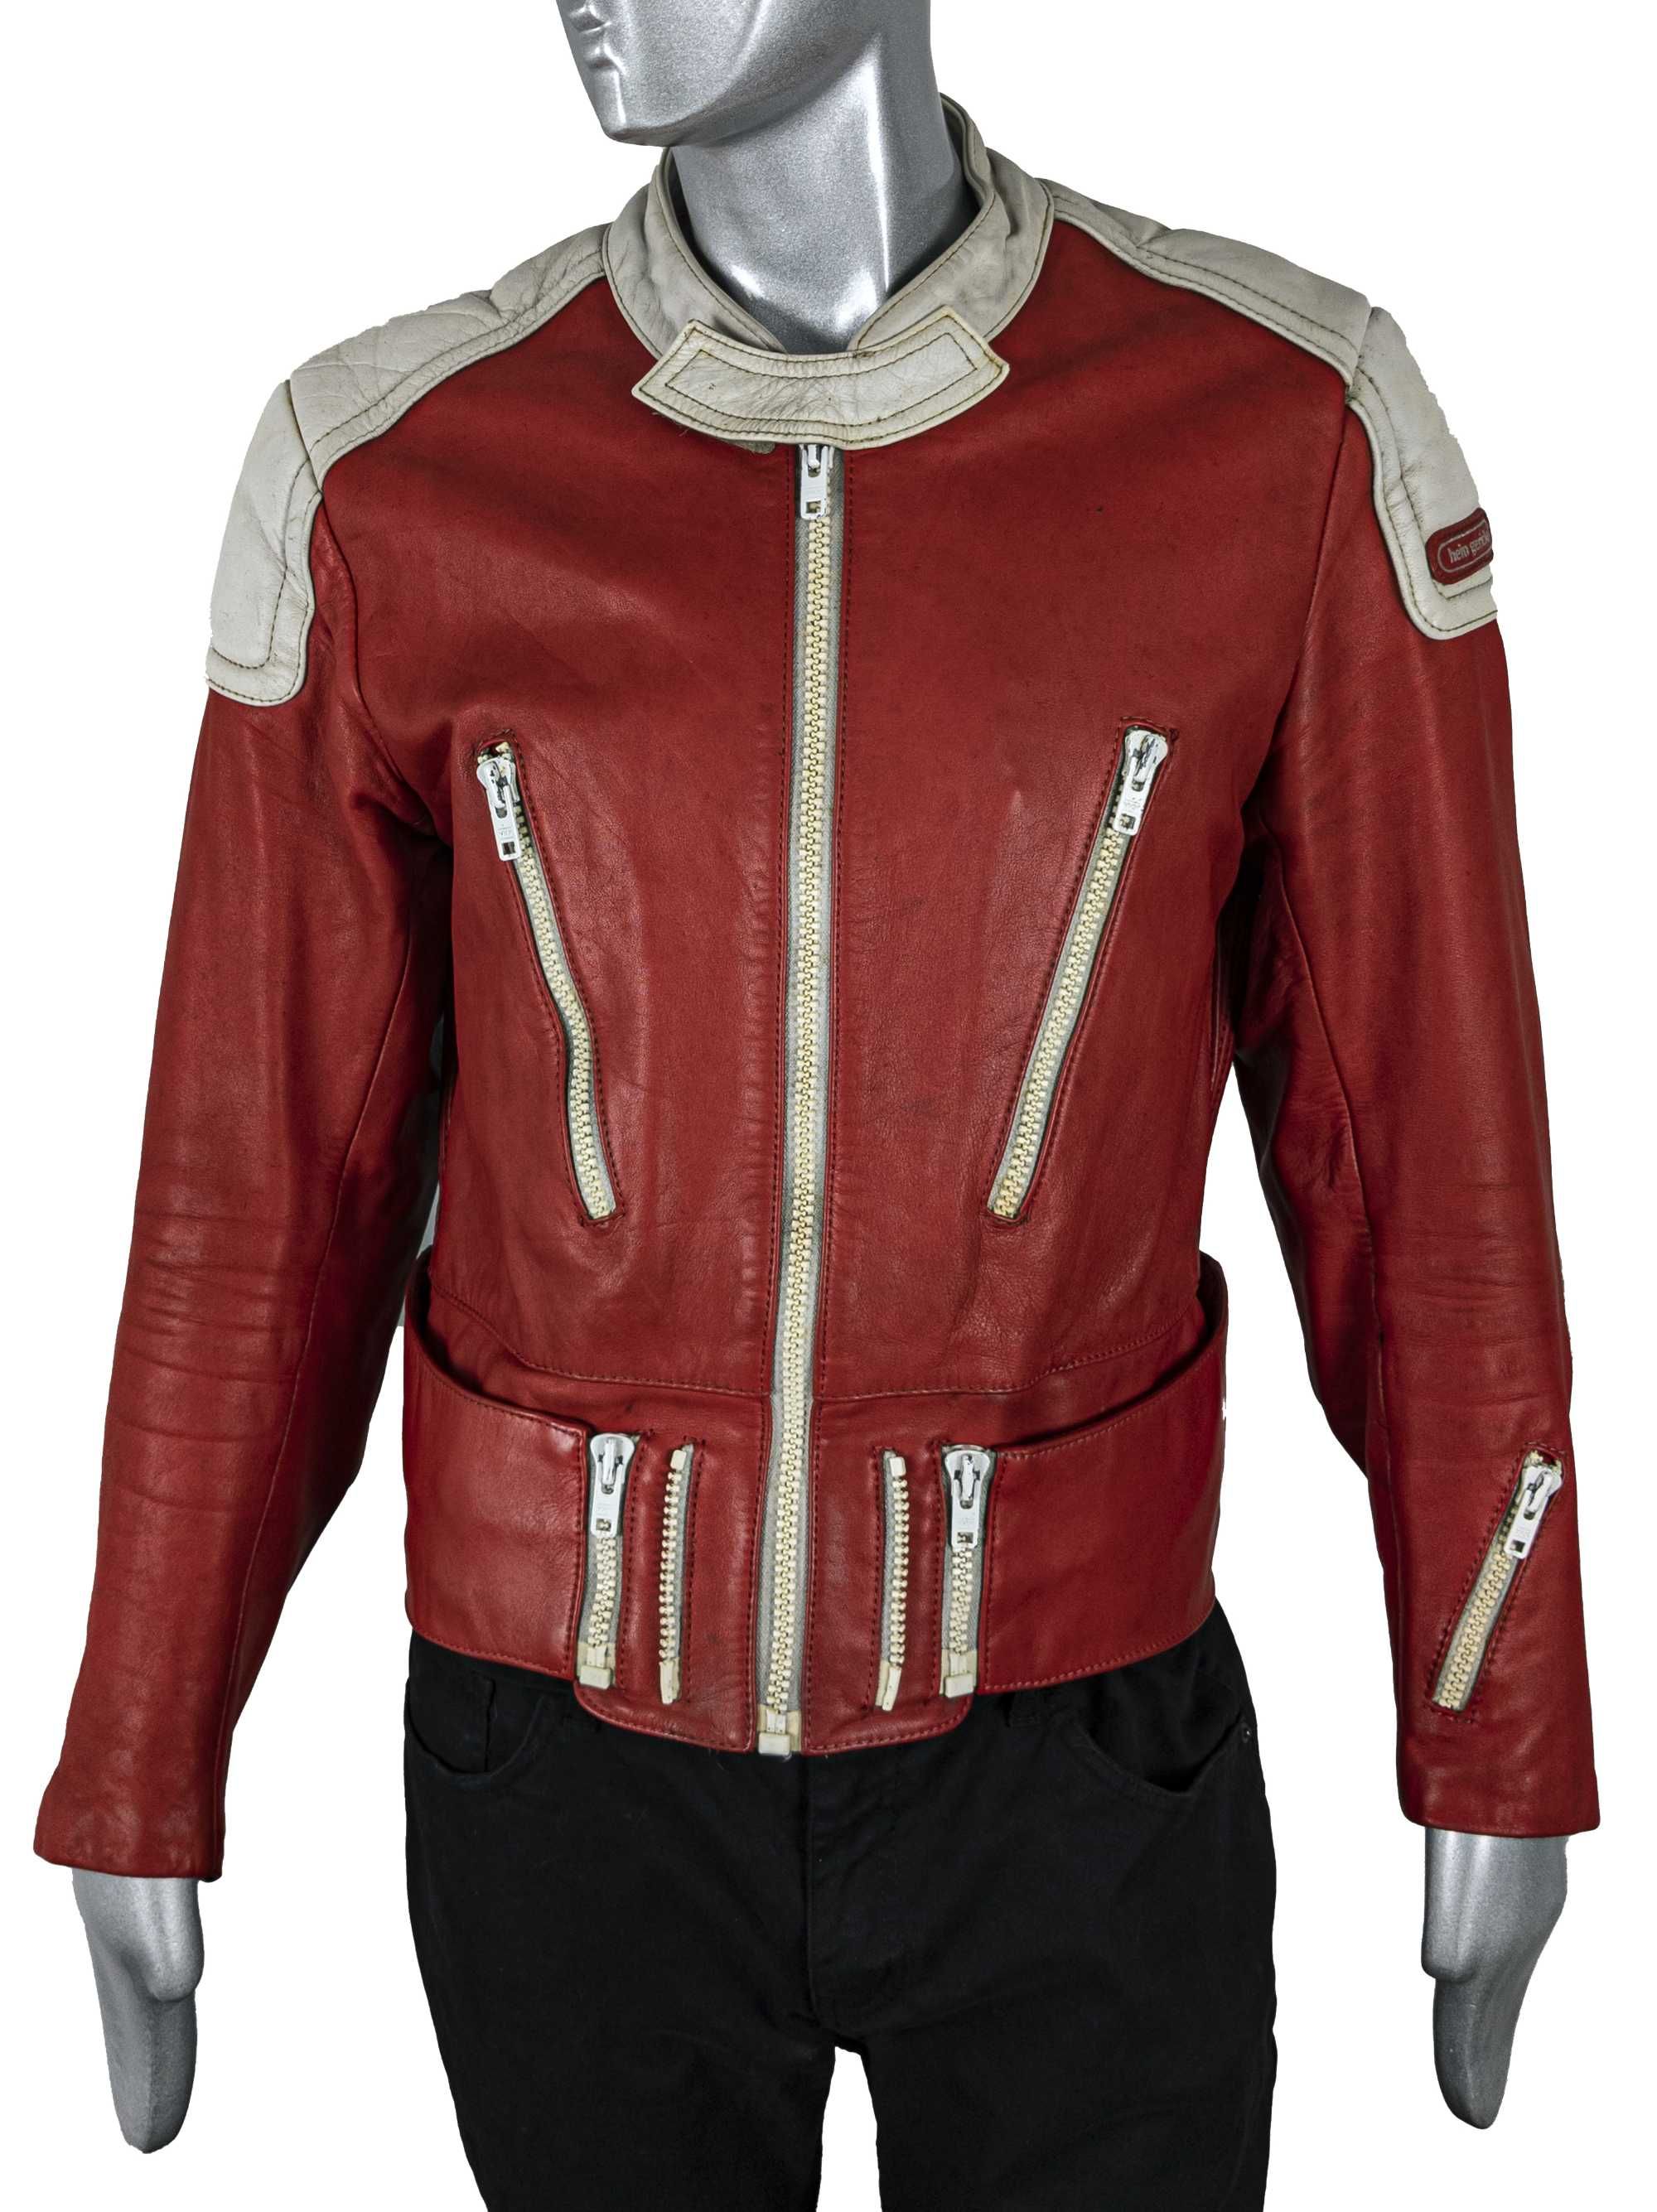 Hein gericke винтажная кожаная байкерская куртка 80х годов мотокуртка